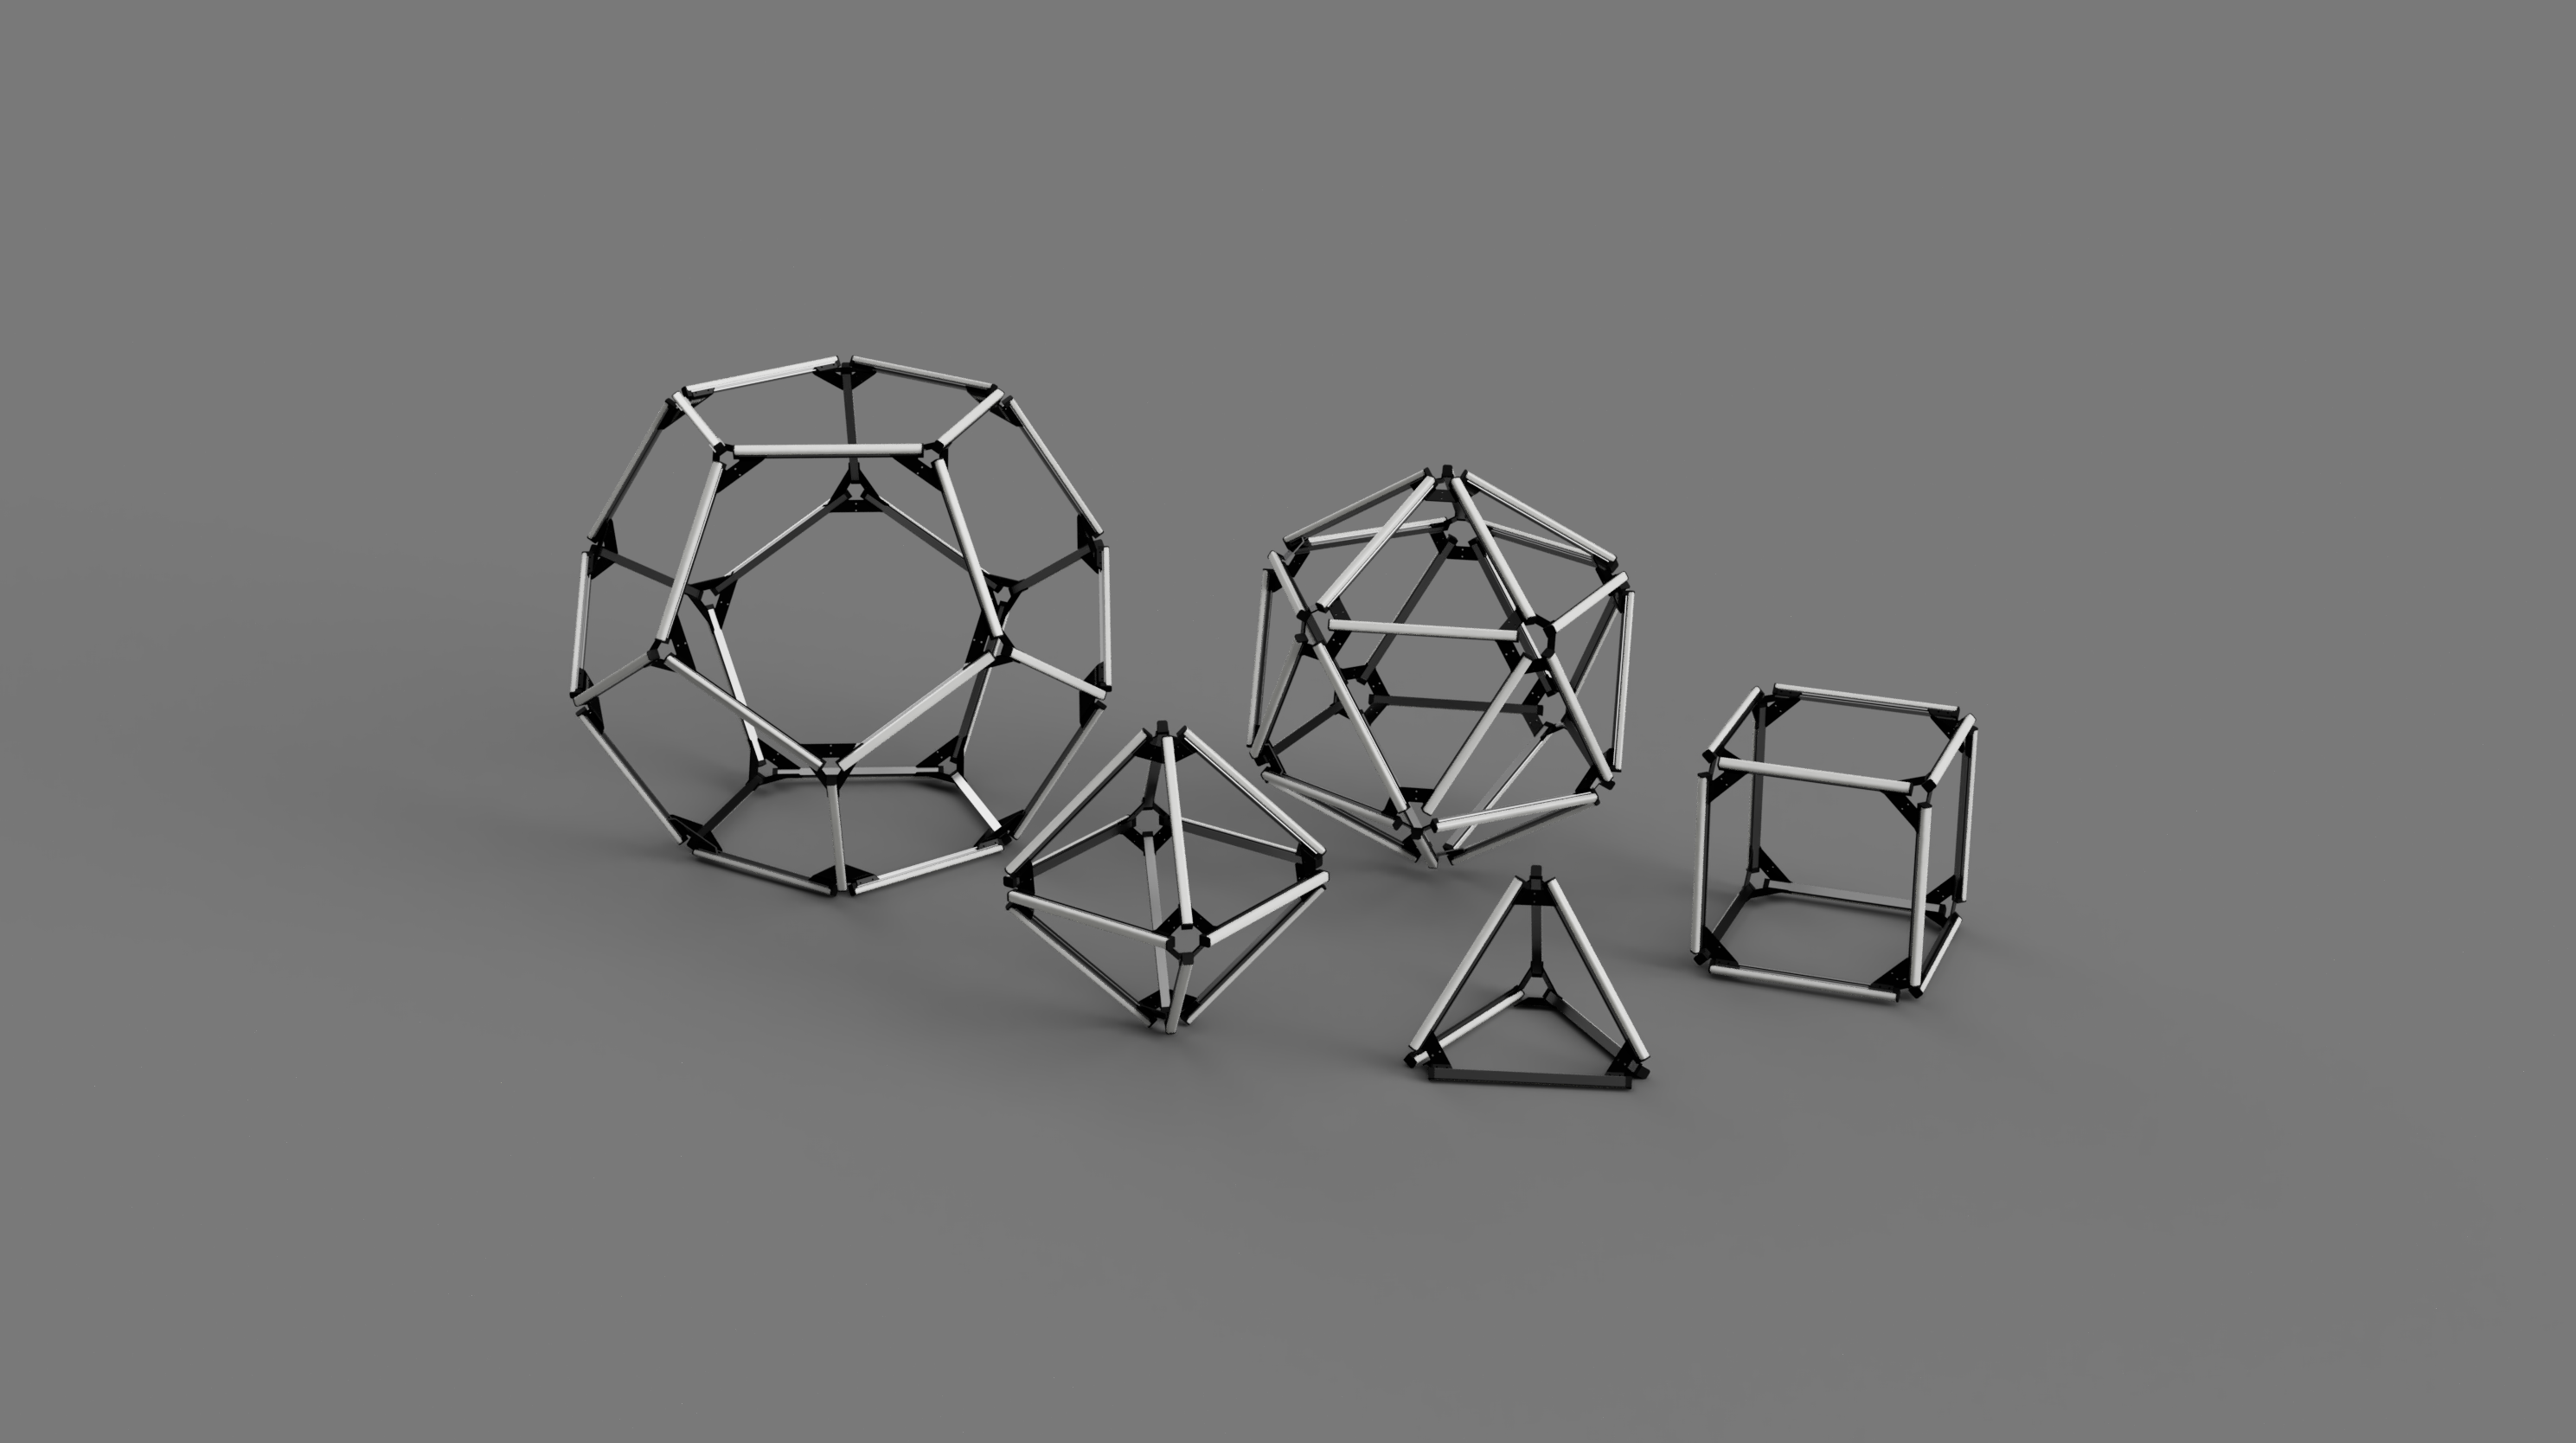 5 platonic solids